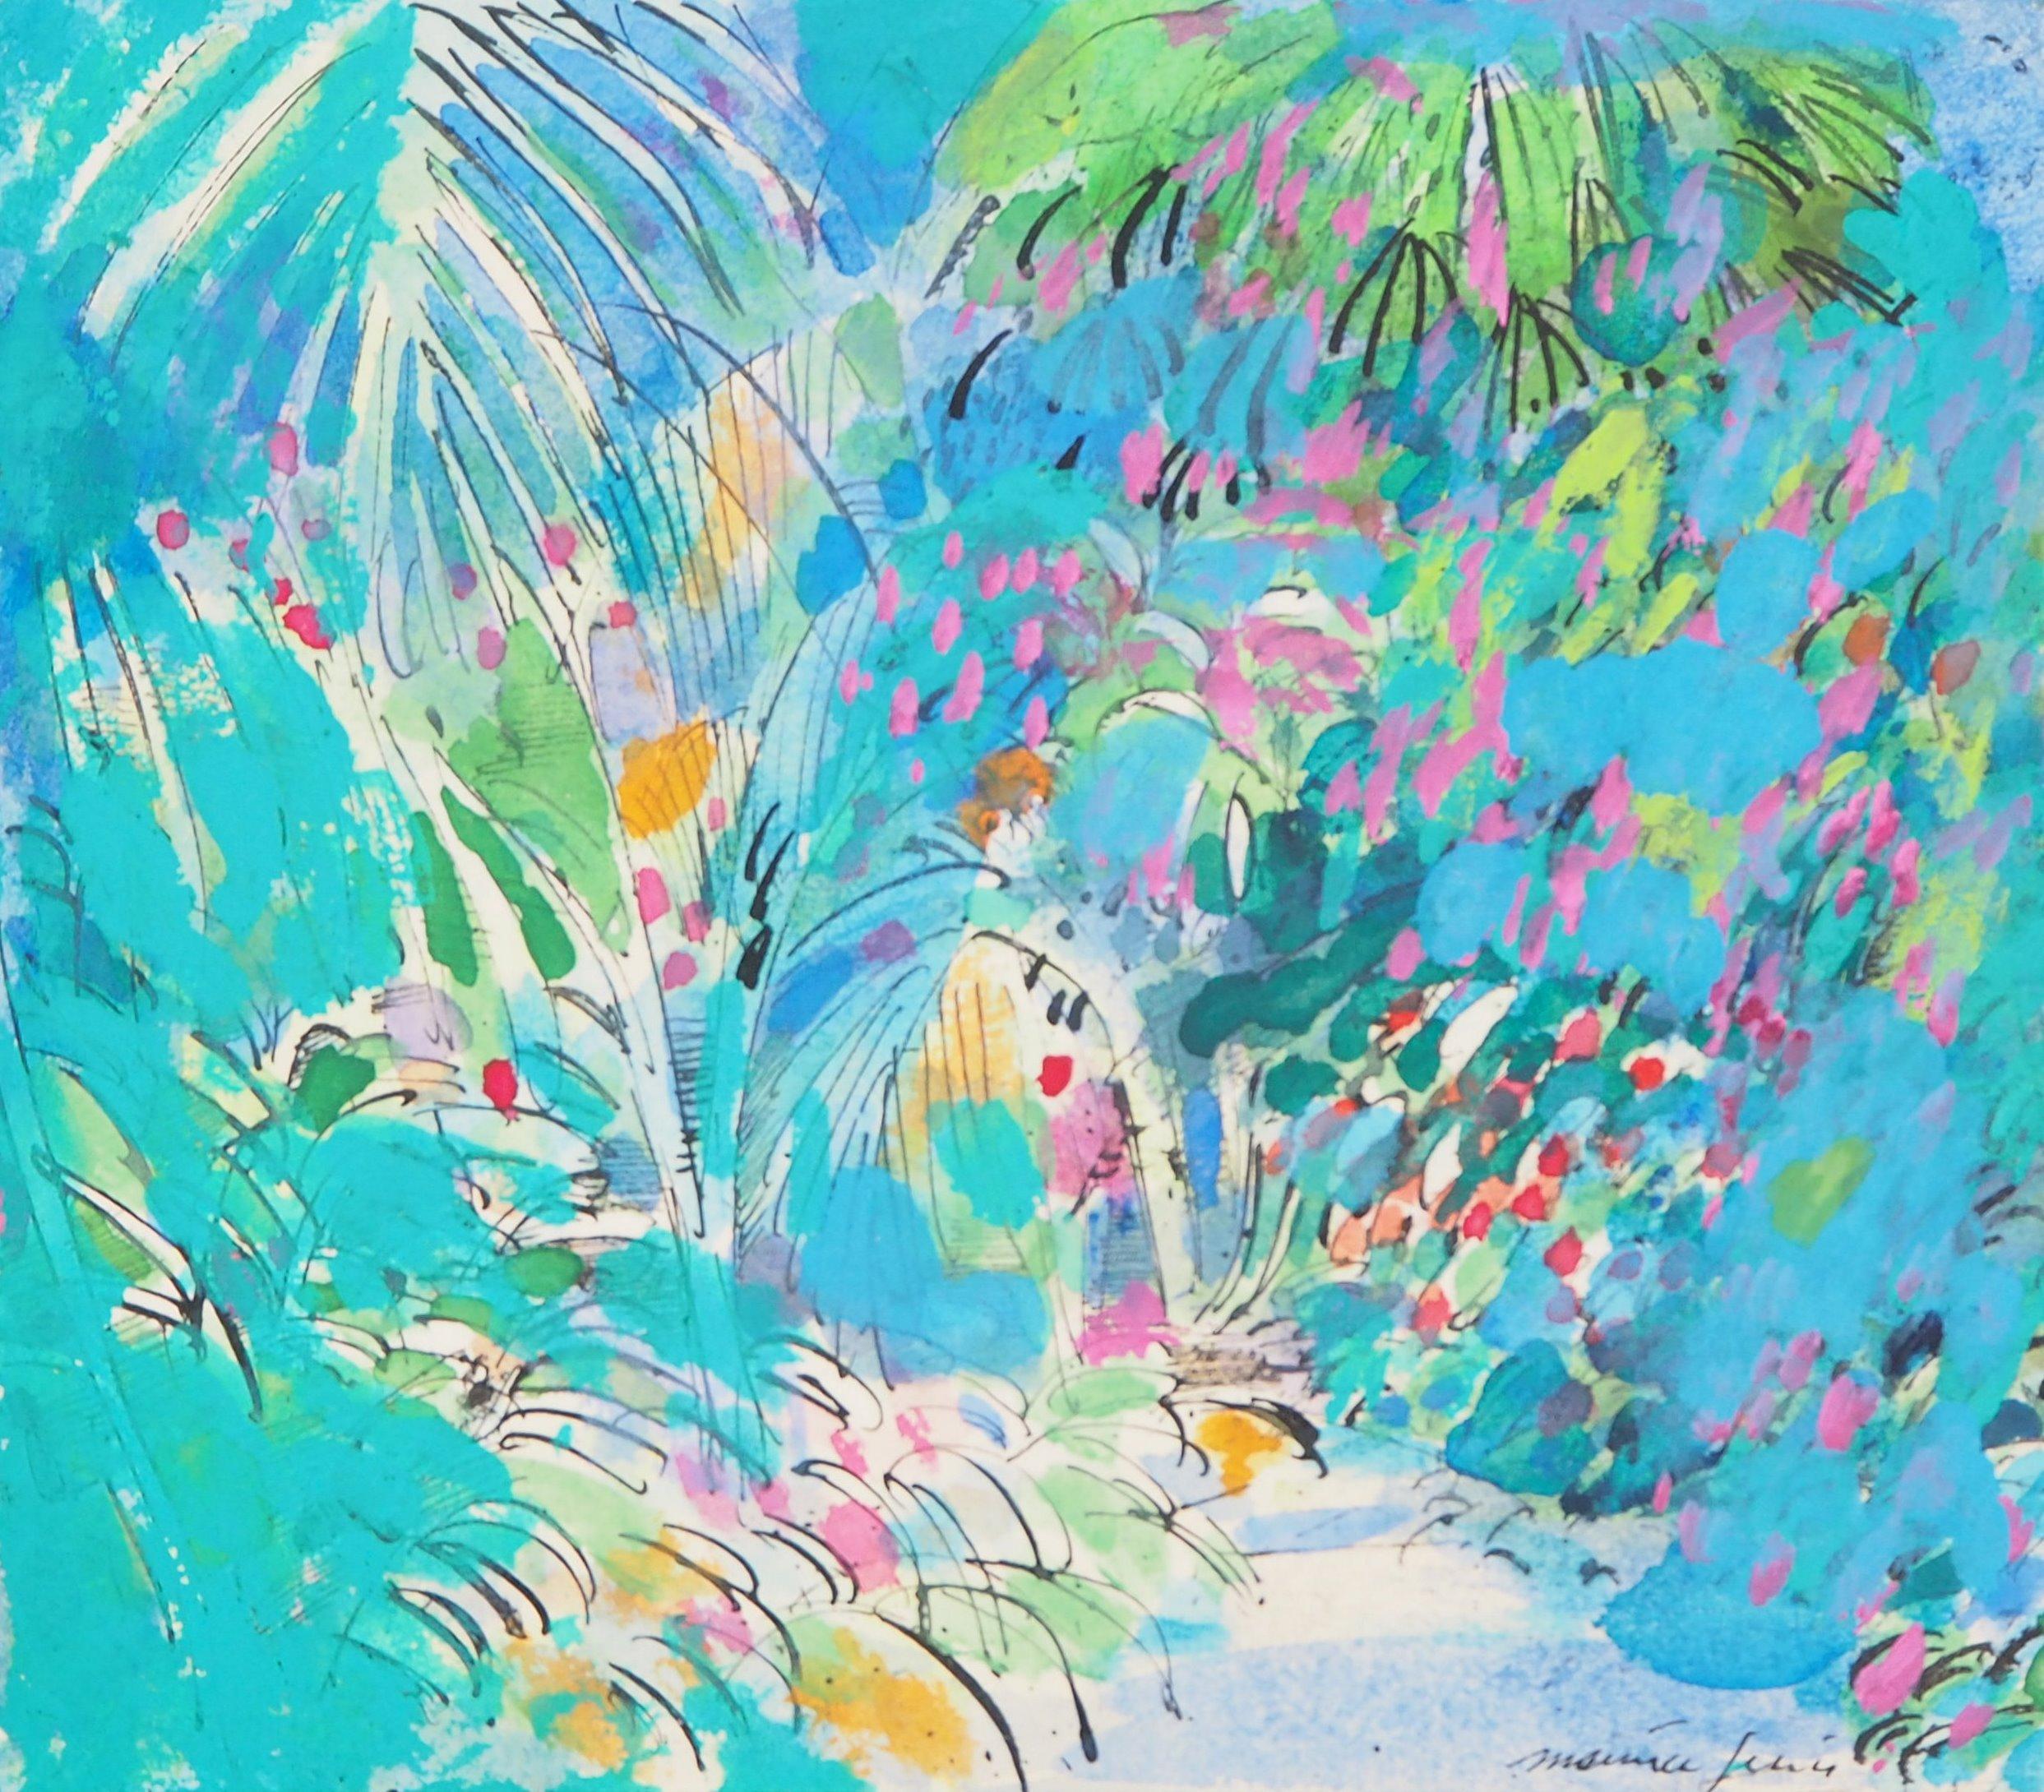 Maurice Genis Landscape Art - Impressionist Tropical Scenery - Original Handsigned Painting